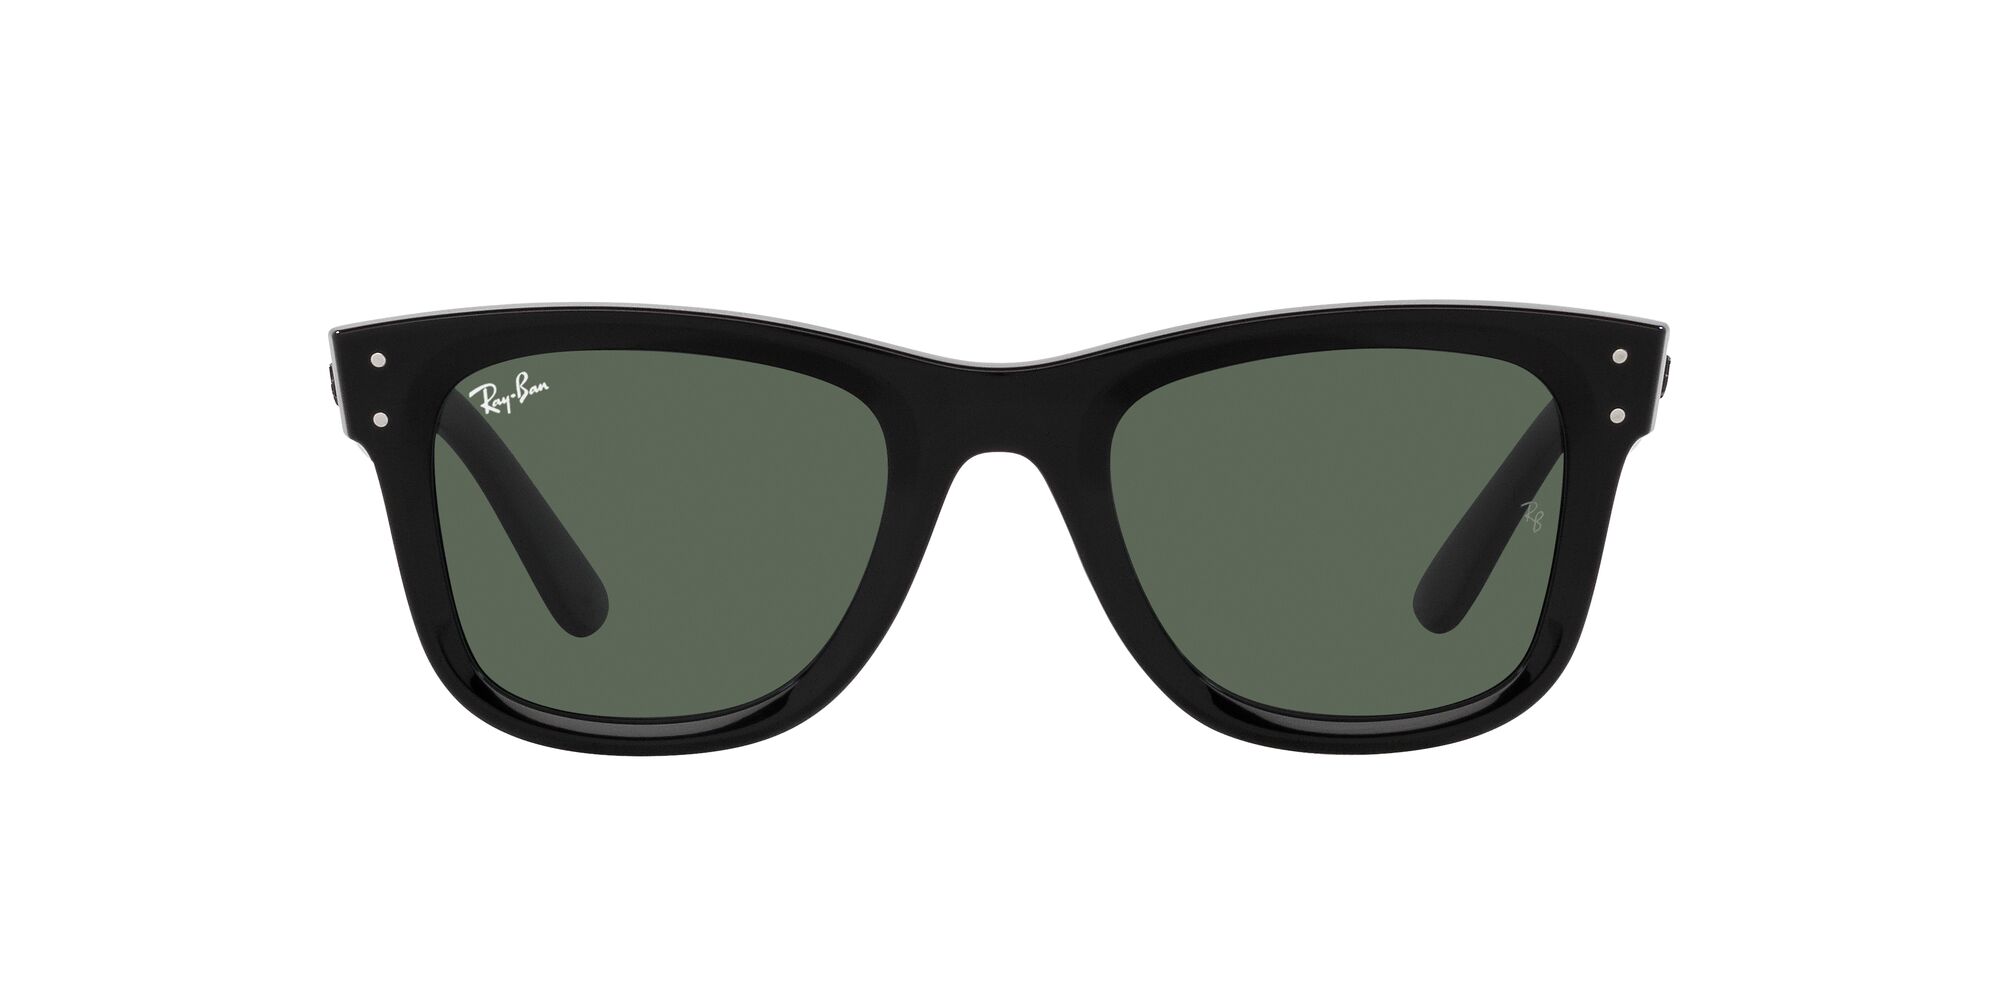 Buy KDH Sunglasses Black Aqua Blue For Unisex (RB-4413) at Amazon.in